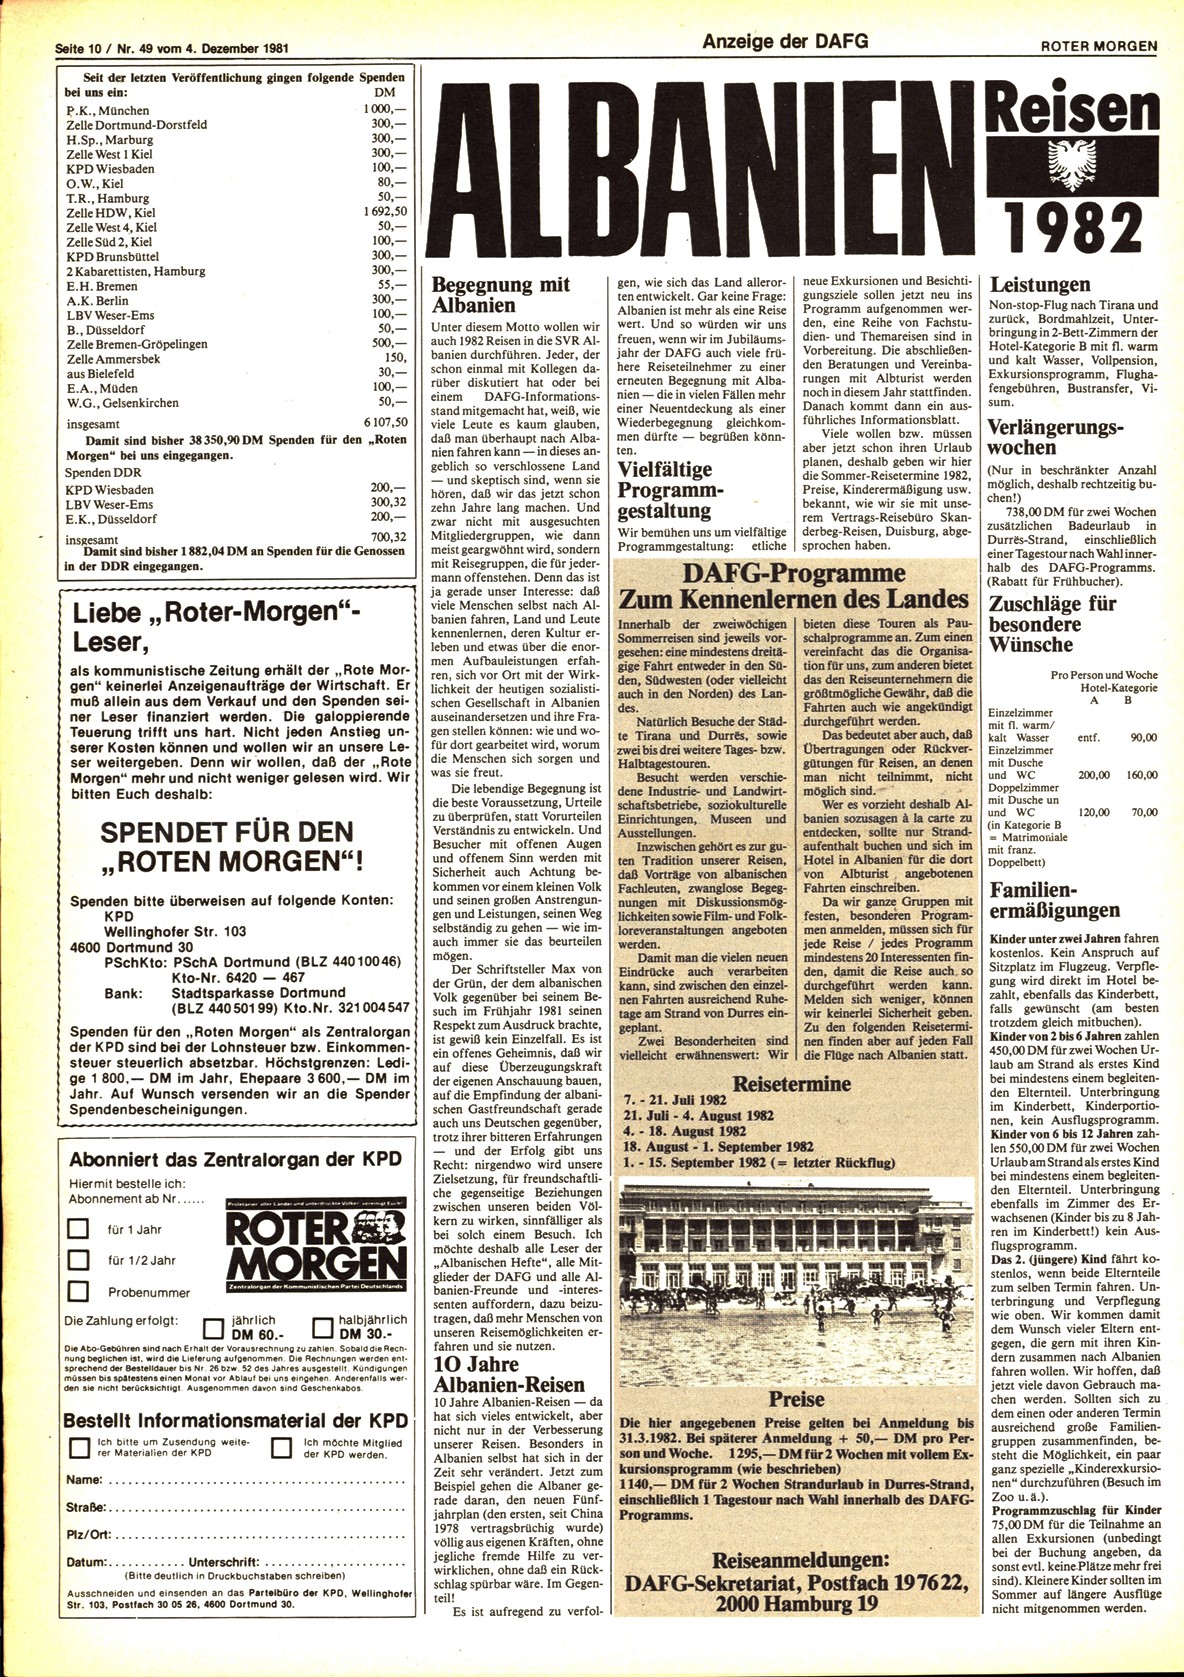 Roter Morgen, 15. Jg., 4. Dezember 1981, Nr. 49, Seite 10